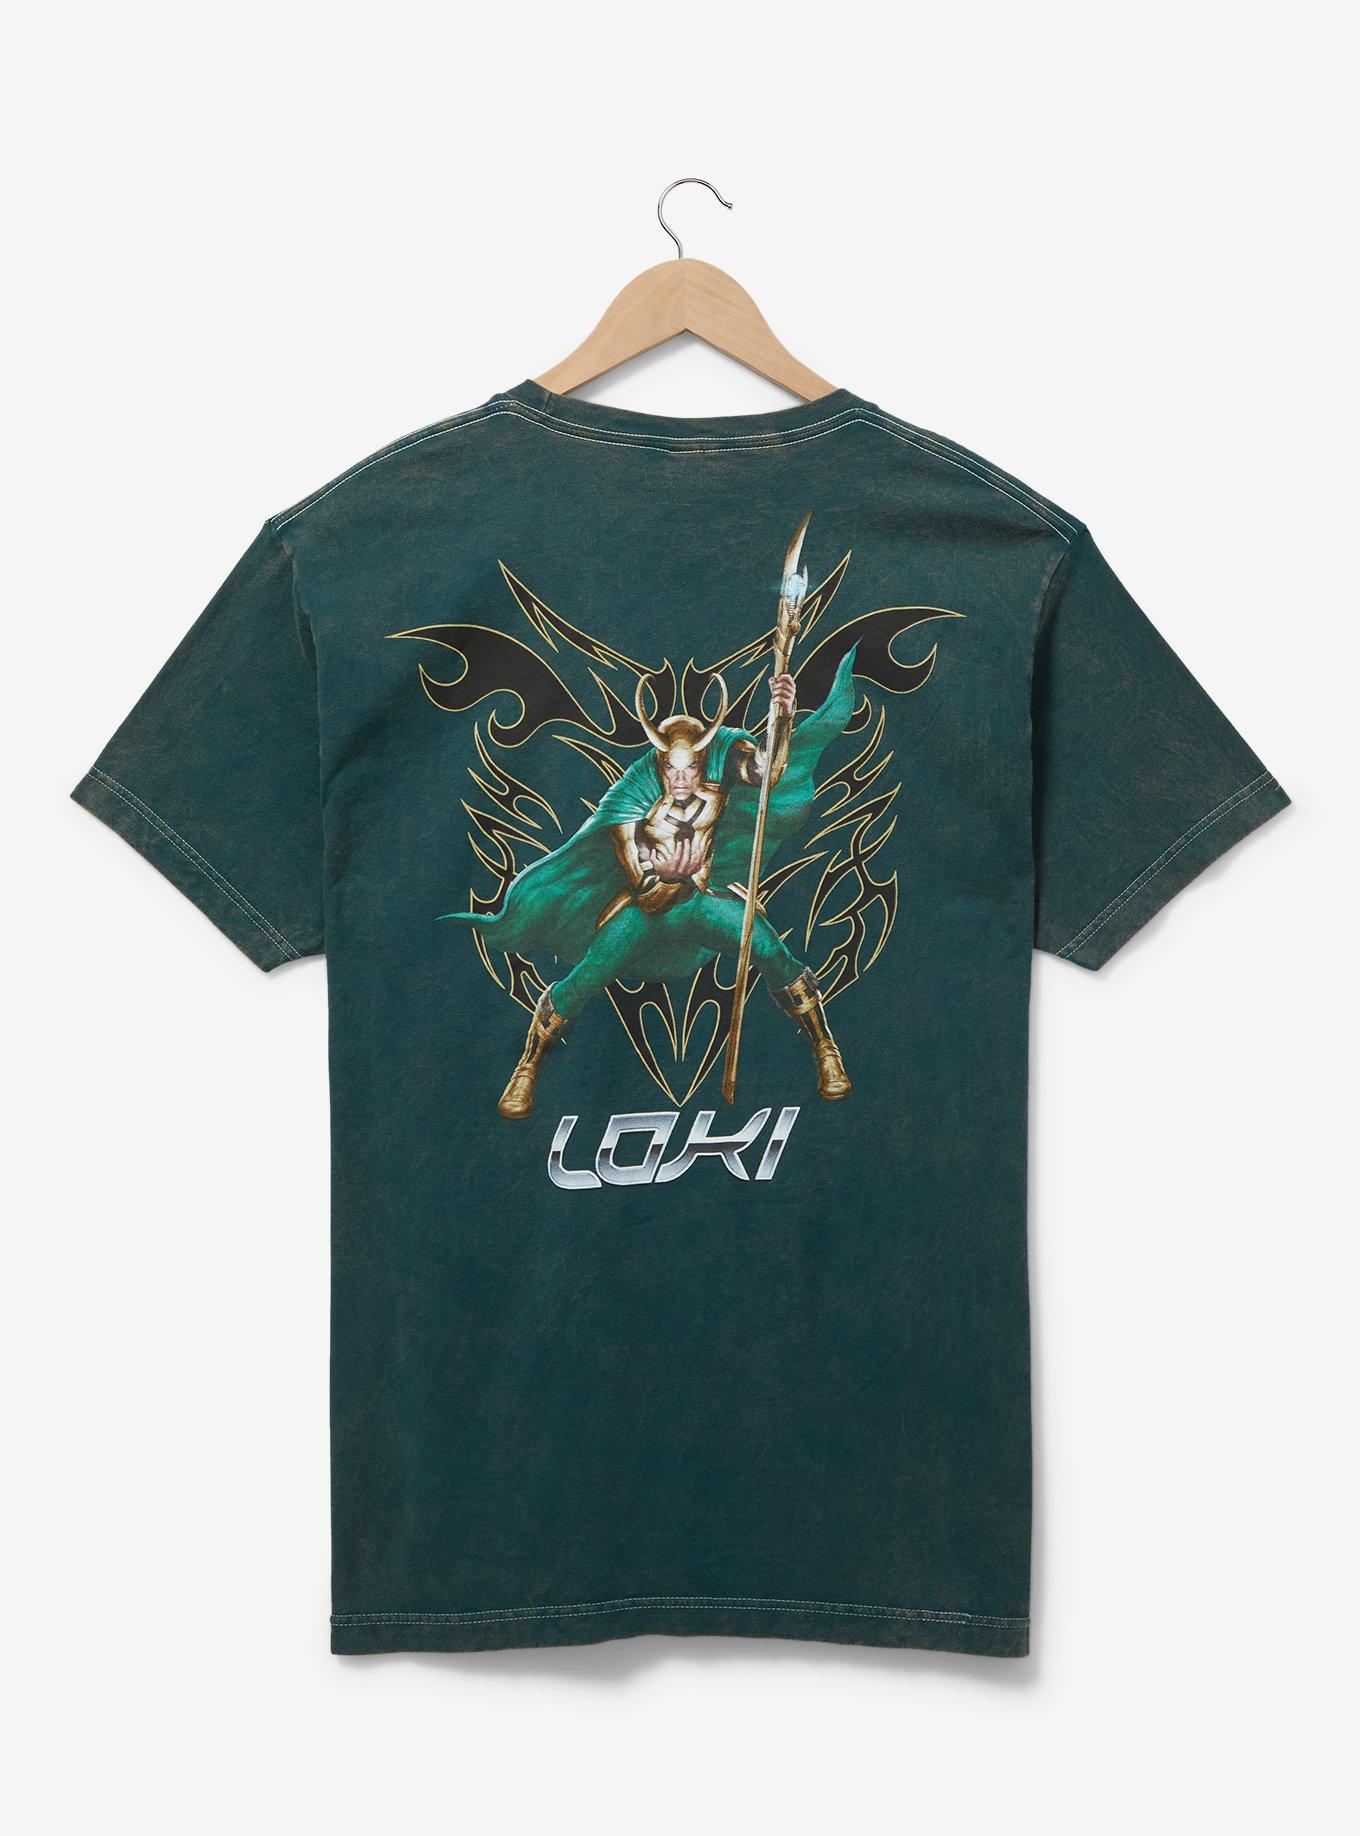 Marvel Loki Chrome Logo T-Shirt - BoxLunch Exclusive, MILITARY GREEN MINERAL WASH, alternate